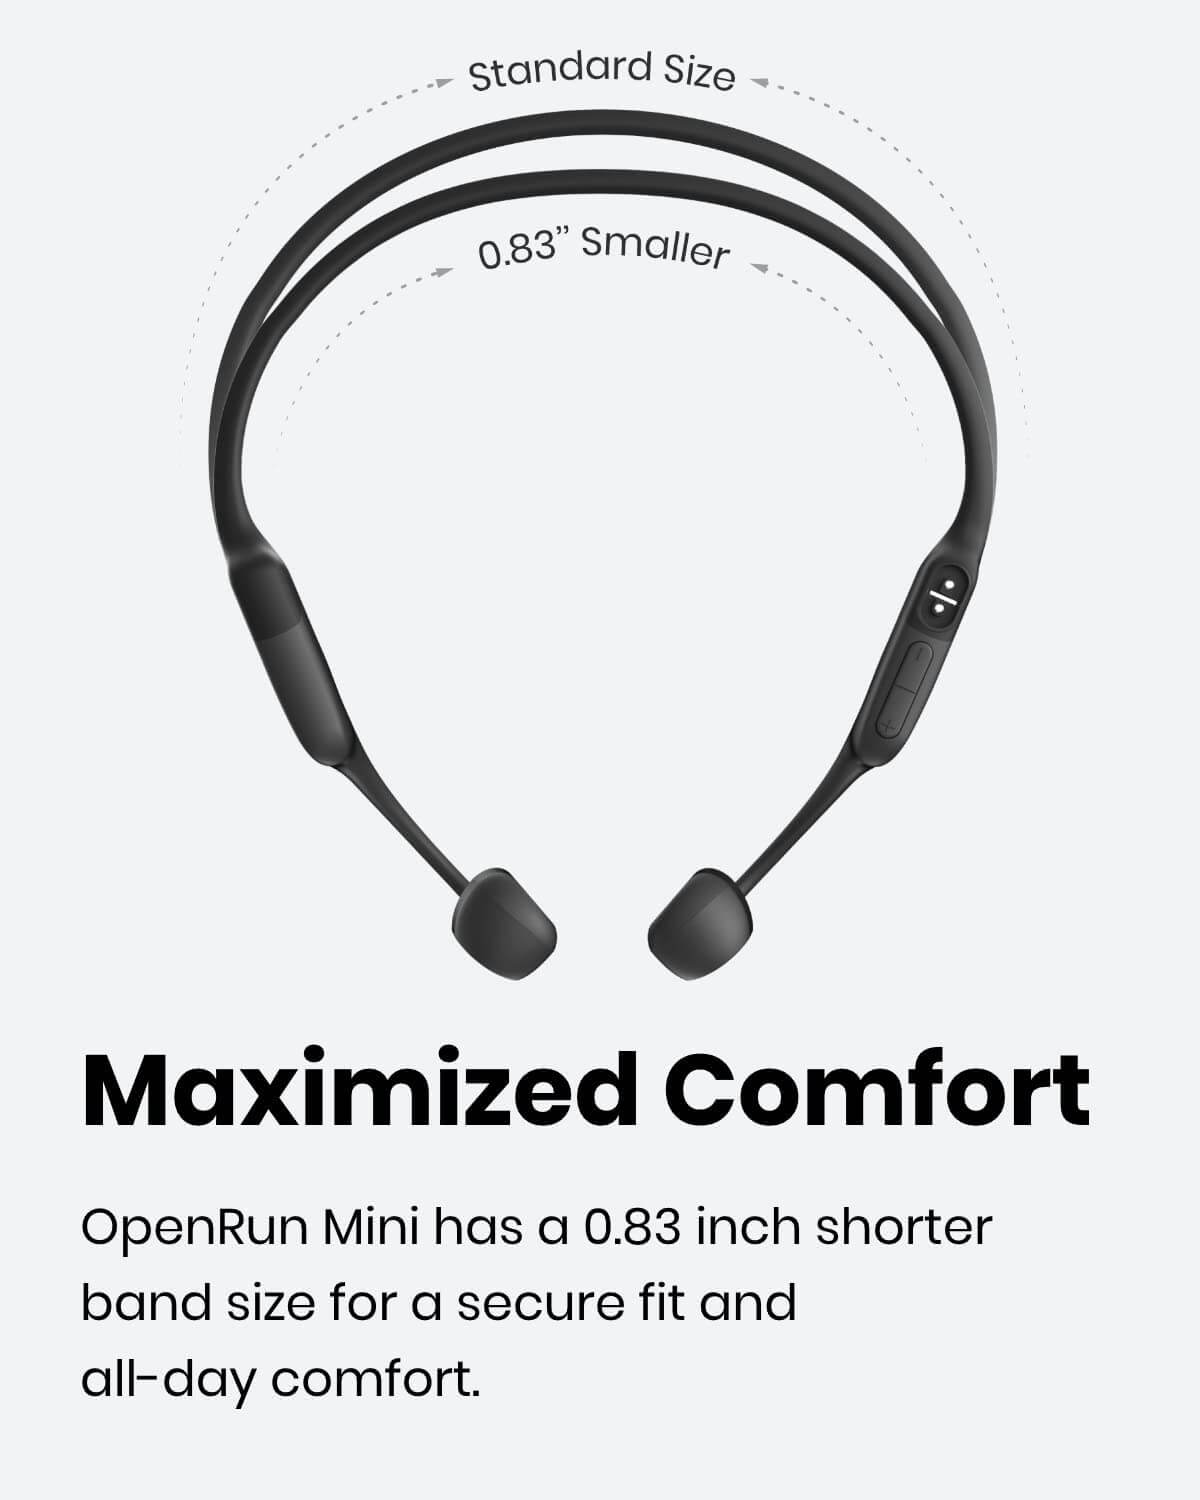 the openrun mini has a shorter band size than the standard openrun